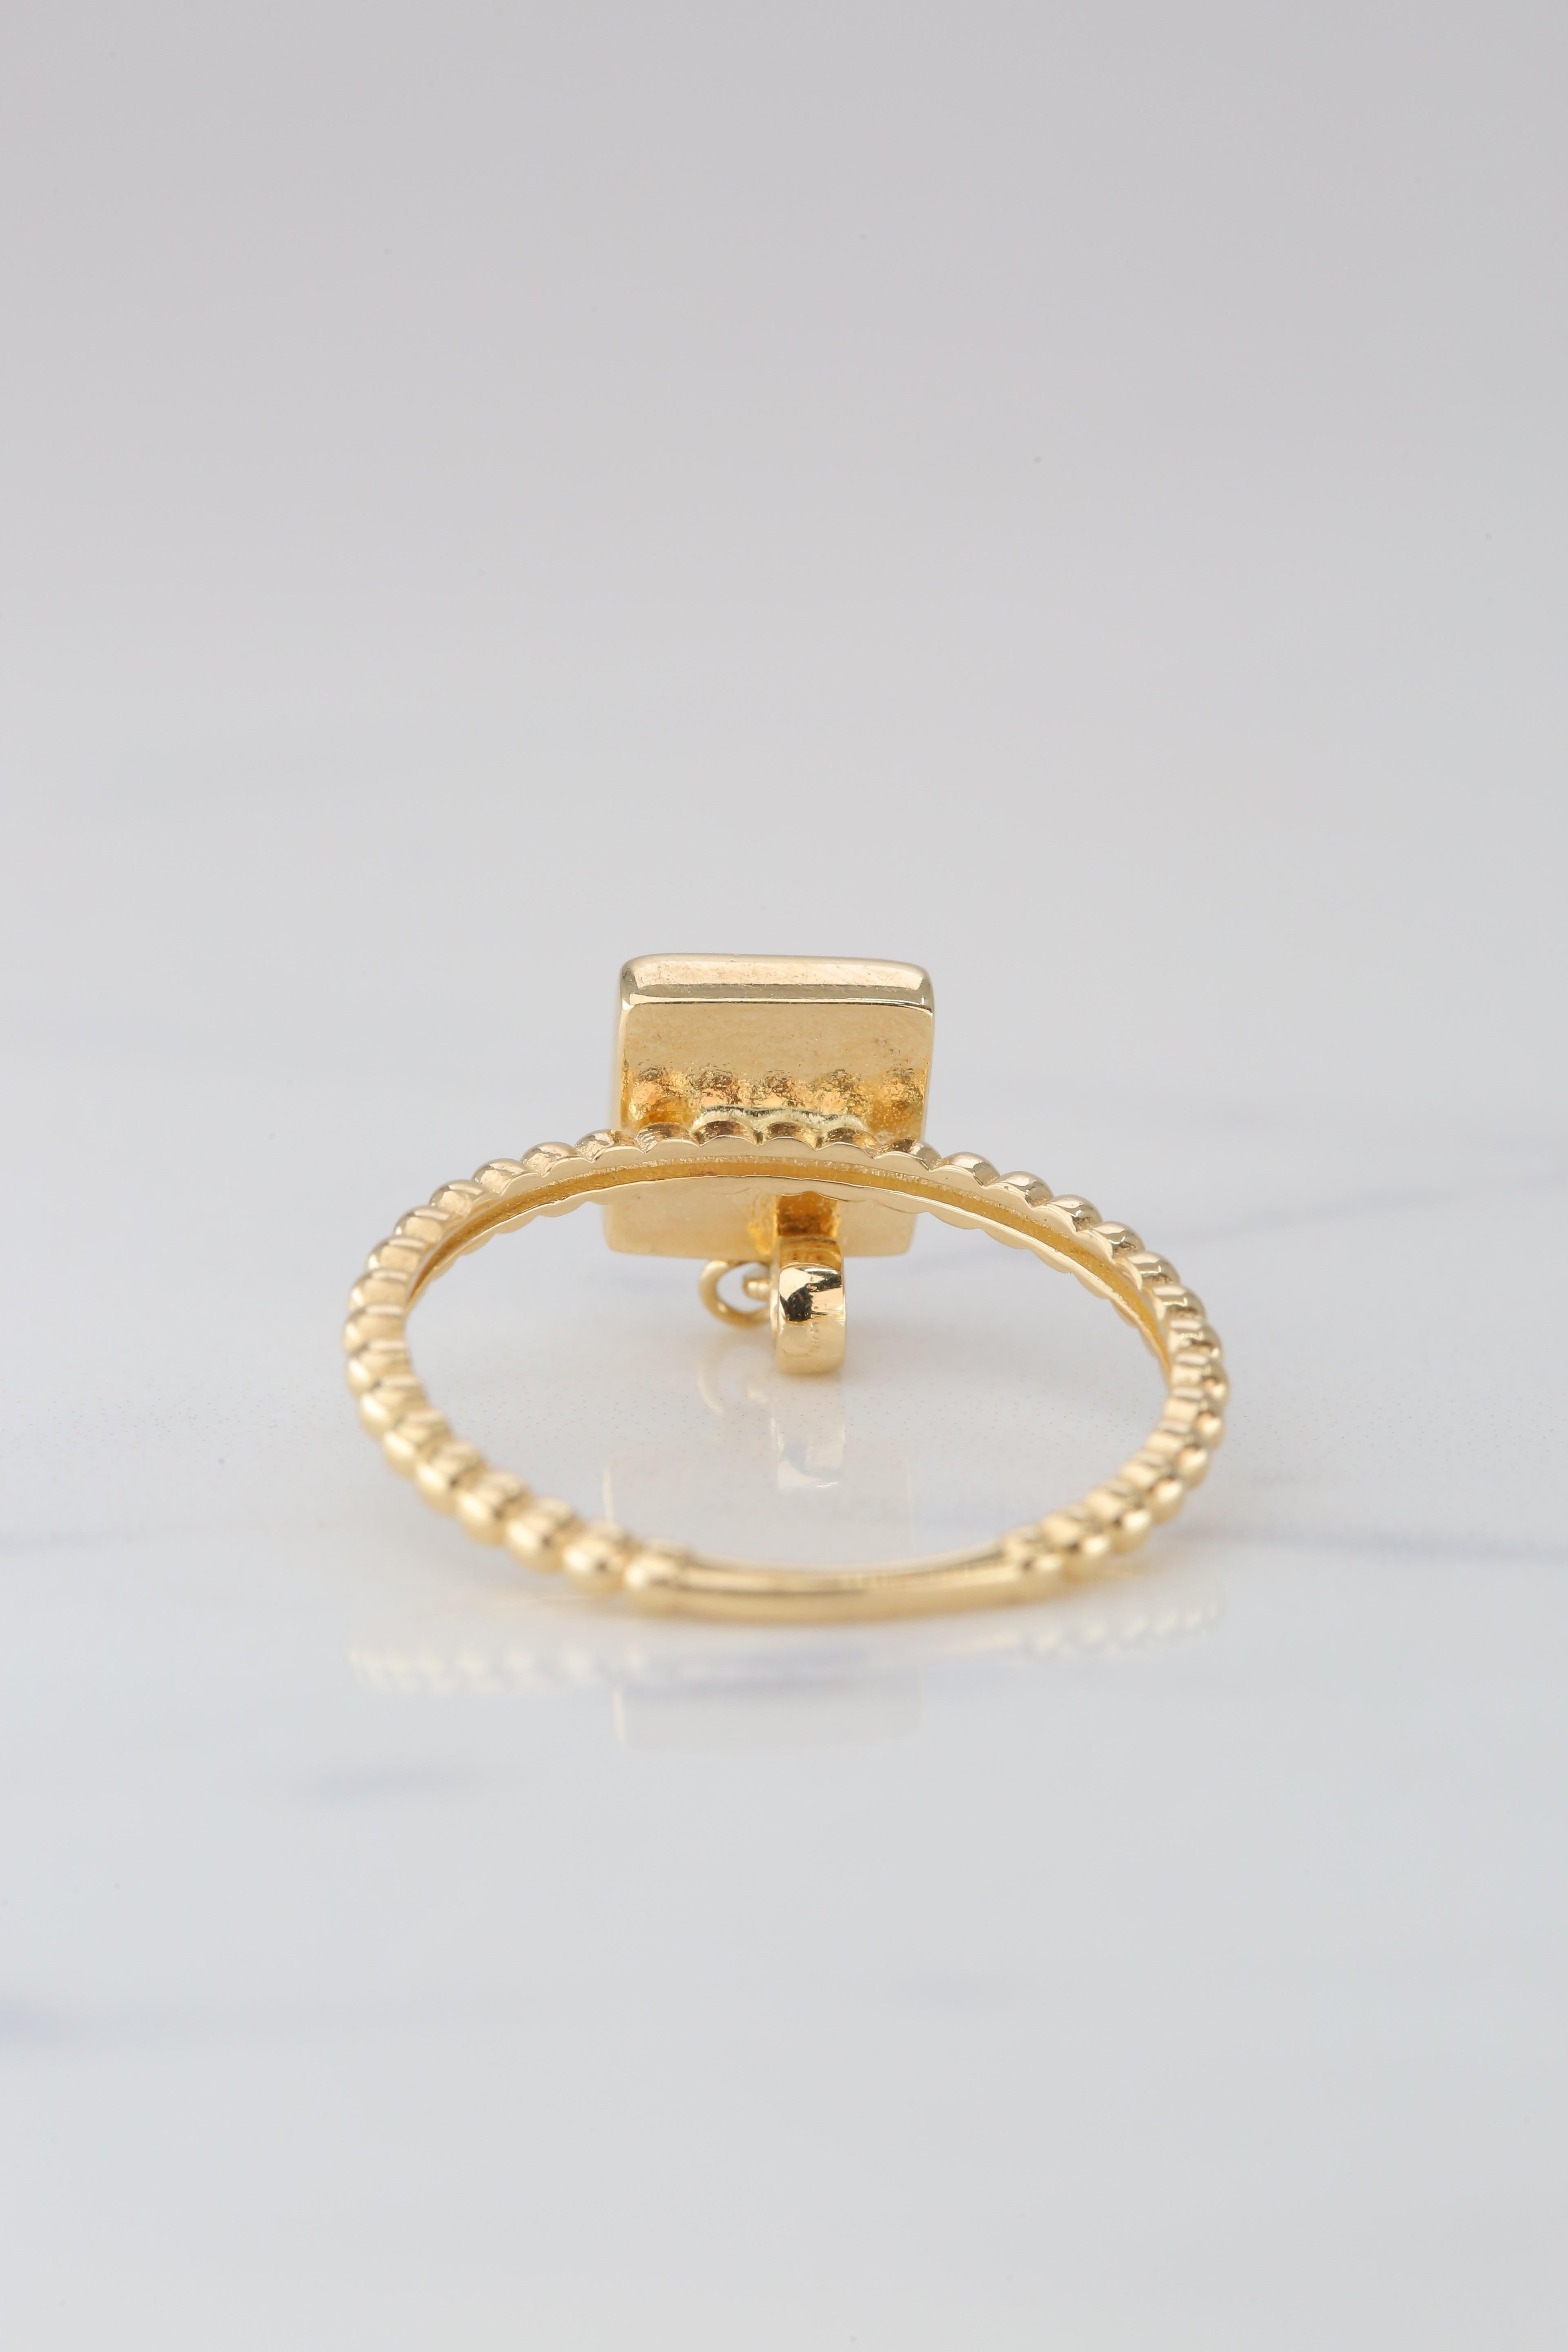 Dainty Zircon Enameled and Lapis Ring, 14K Gold, Minimalist Style Ring 6